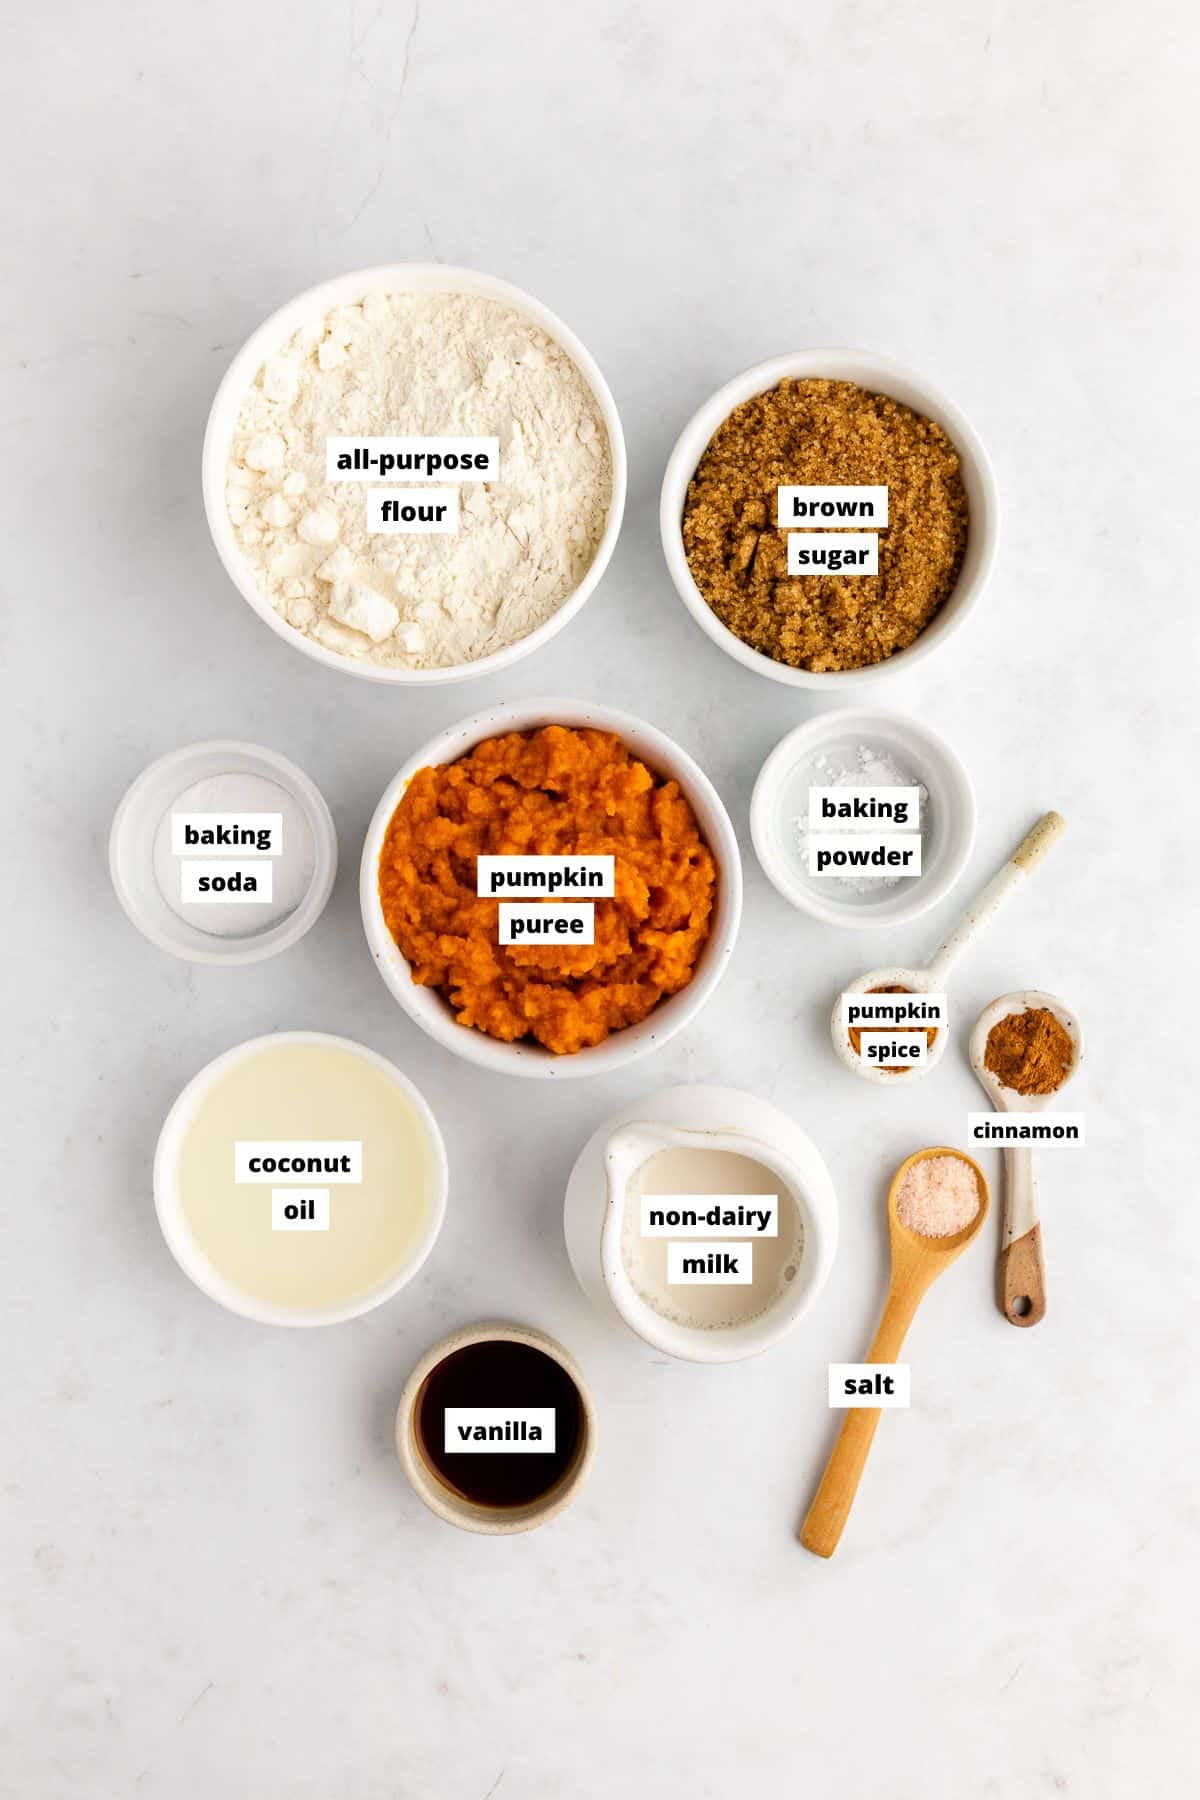 bowls of ingredients for vegan pumpkin bread including flour, pumpkin puree, brown sugar, and coconut oil